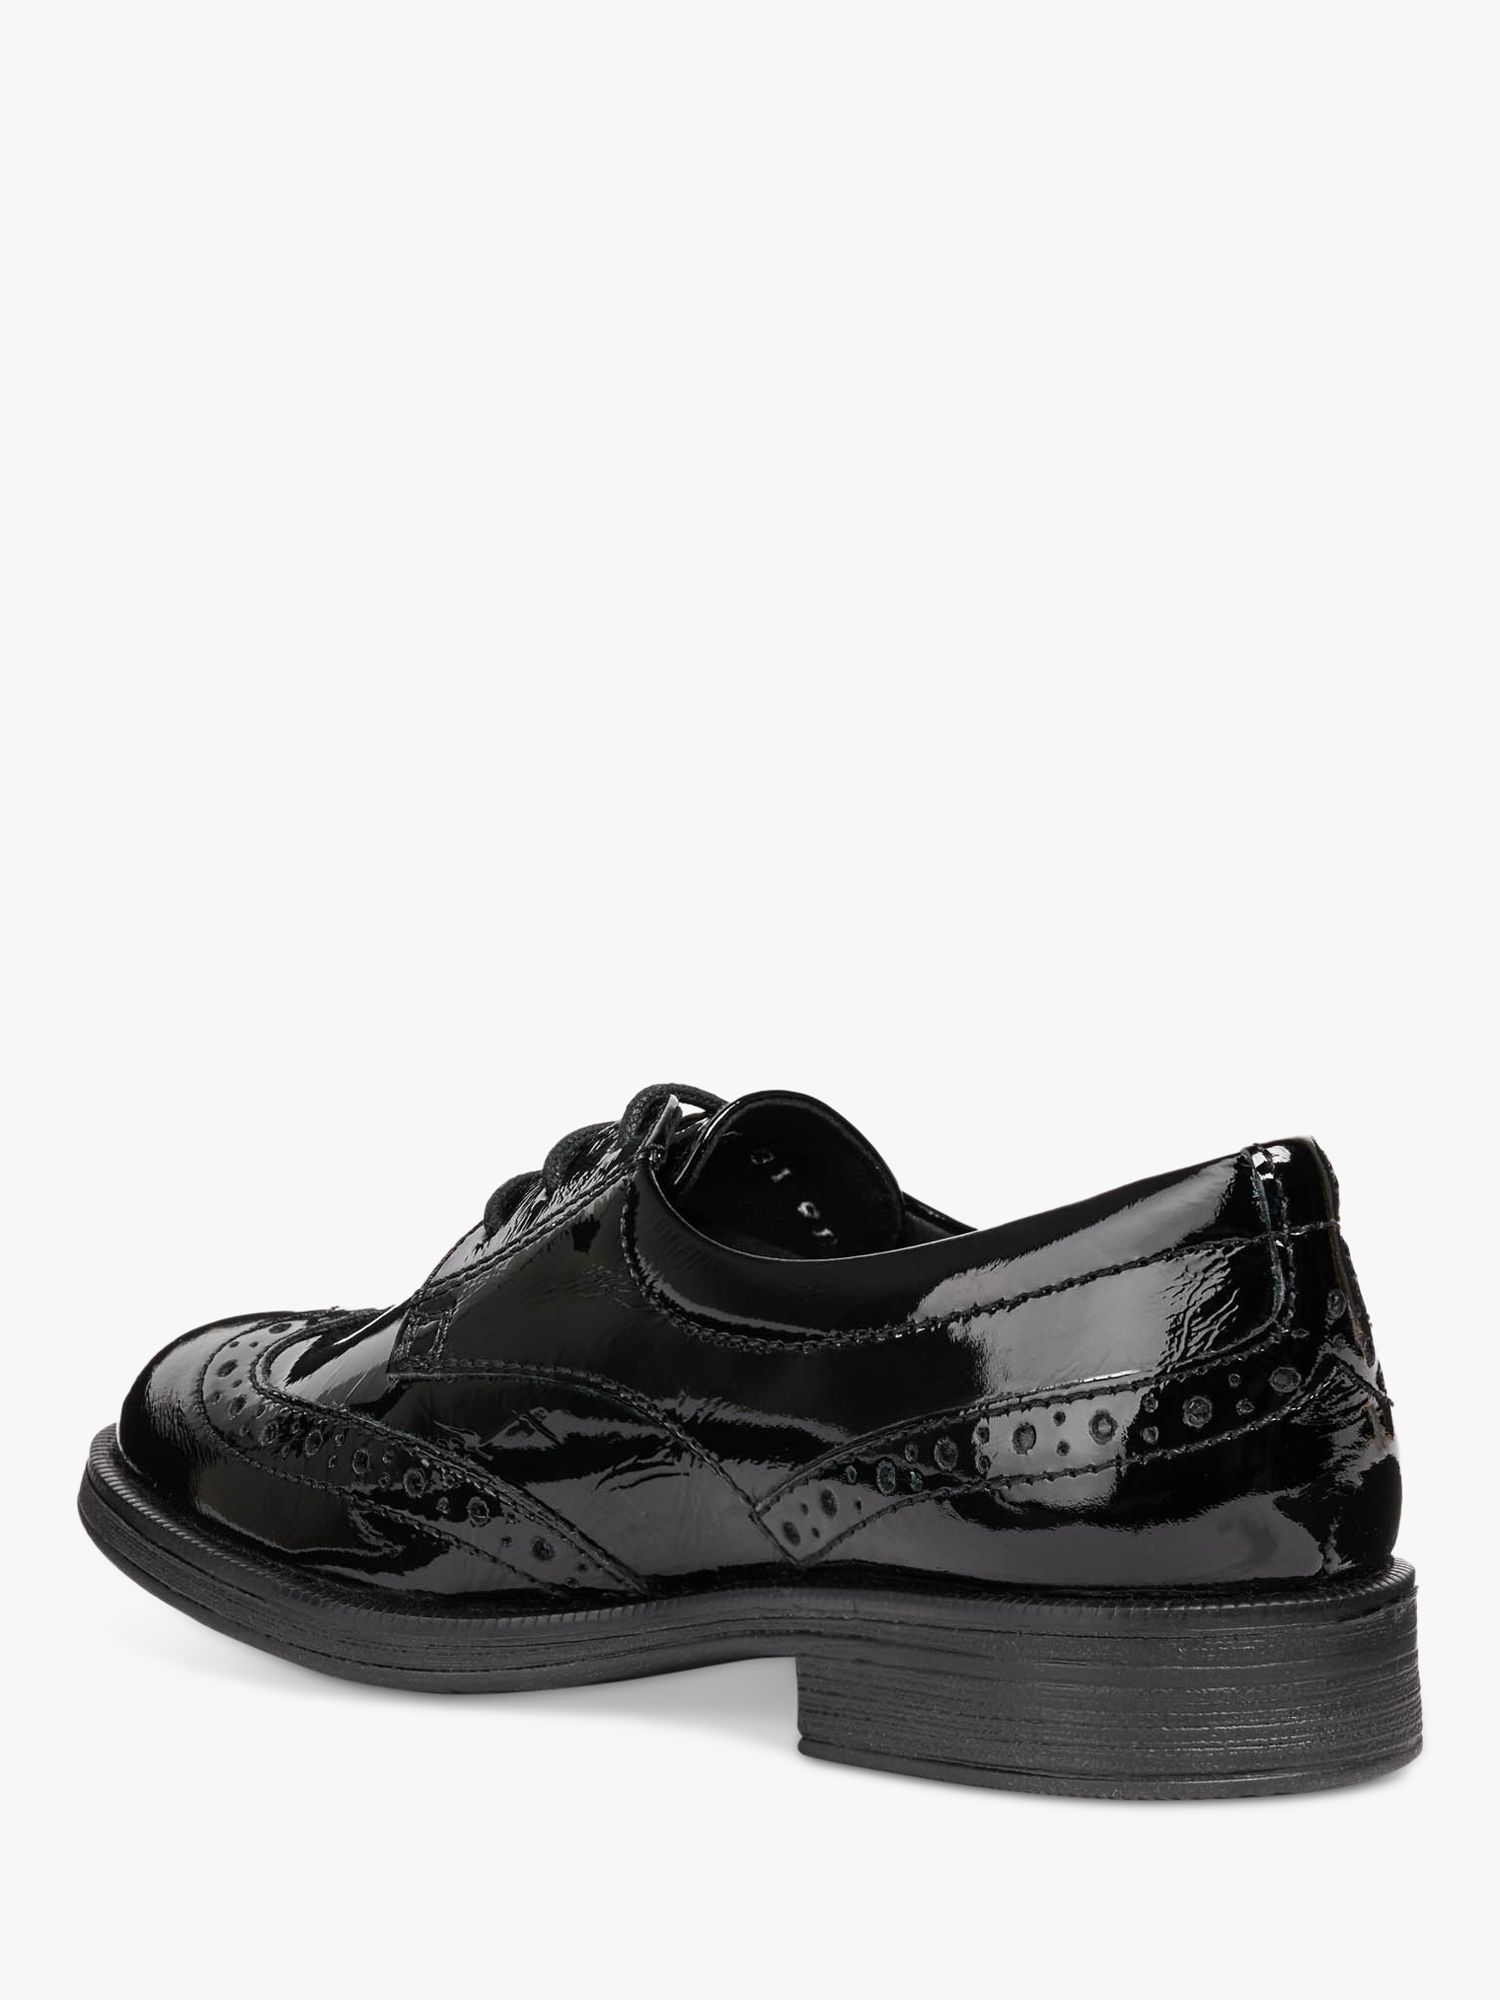 Geox Kids' Agata Lace-Up Brogue School Shoes, Black, 41